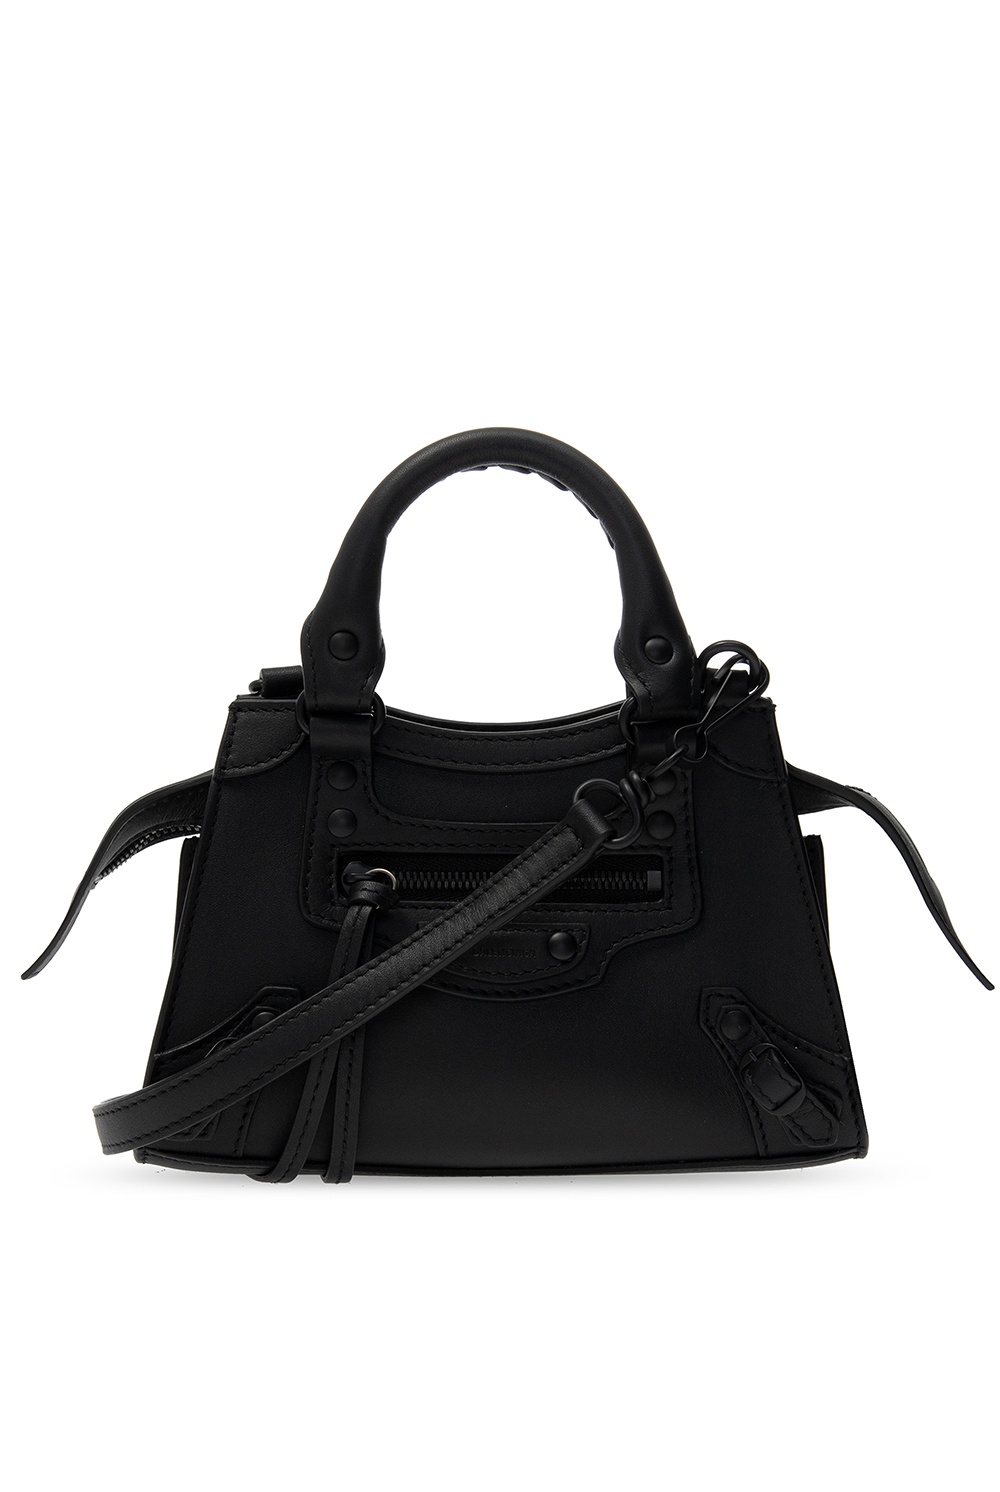 Balenciaga Neo Classic Hobo Xs Embossed Clutch Bag in Black